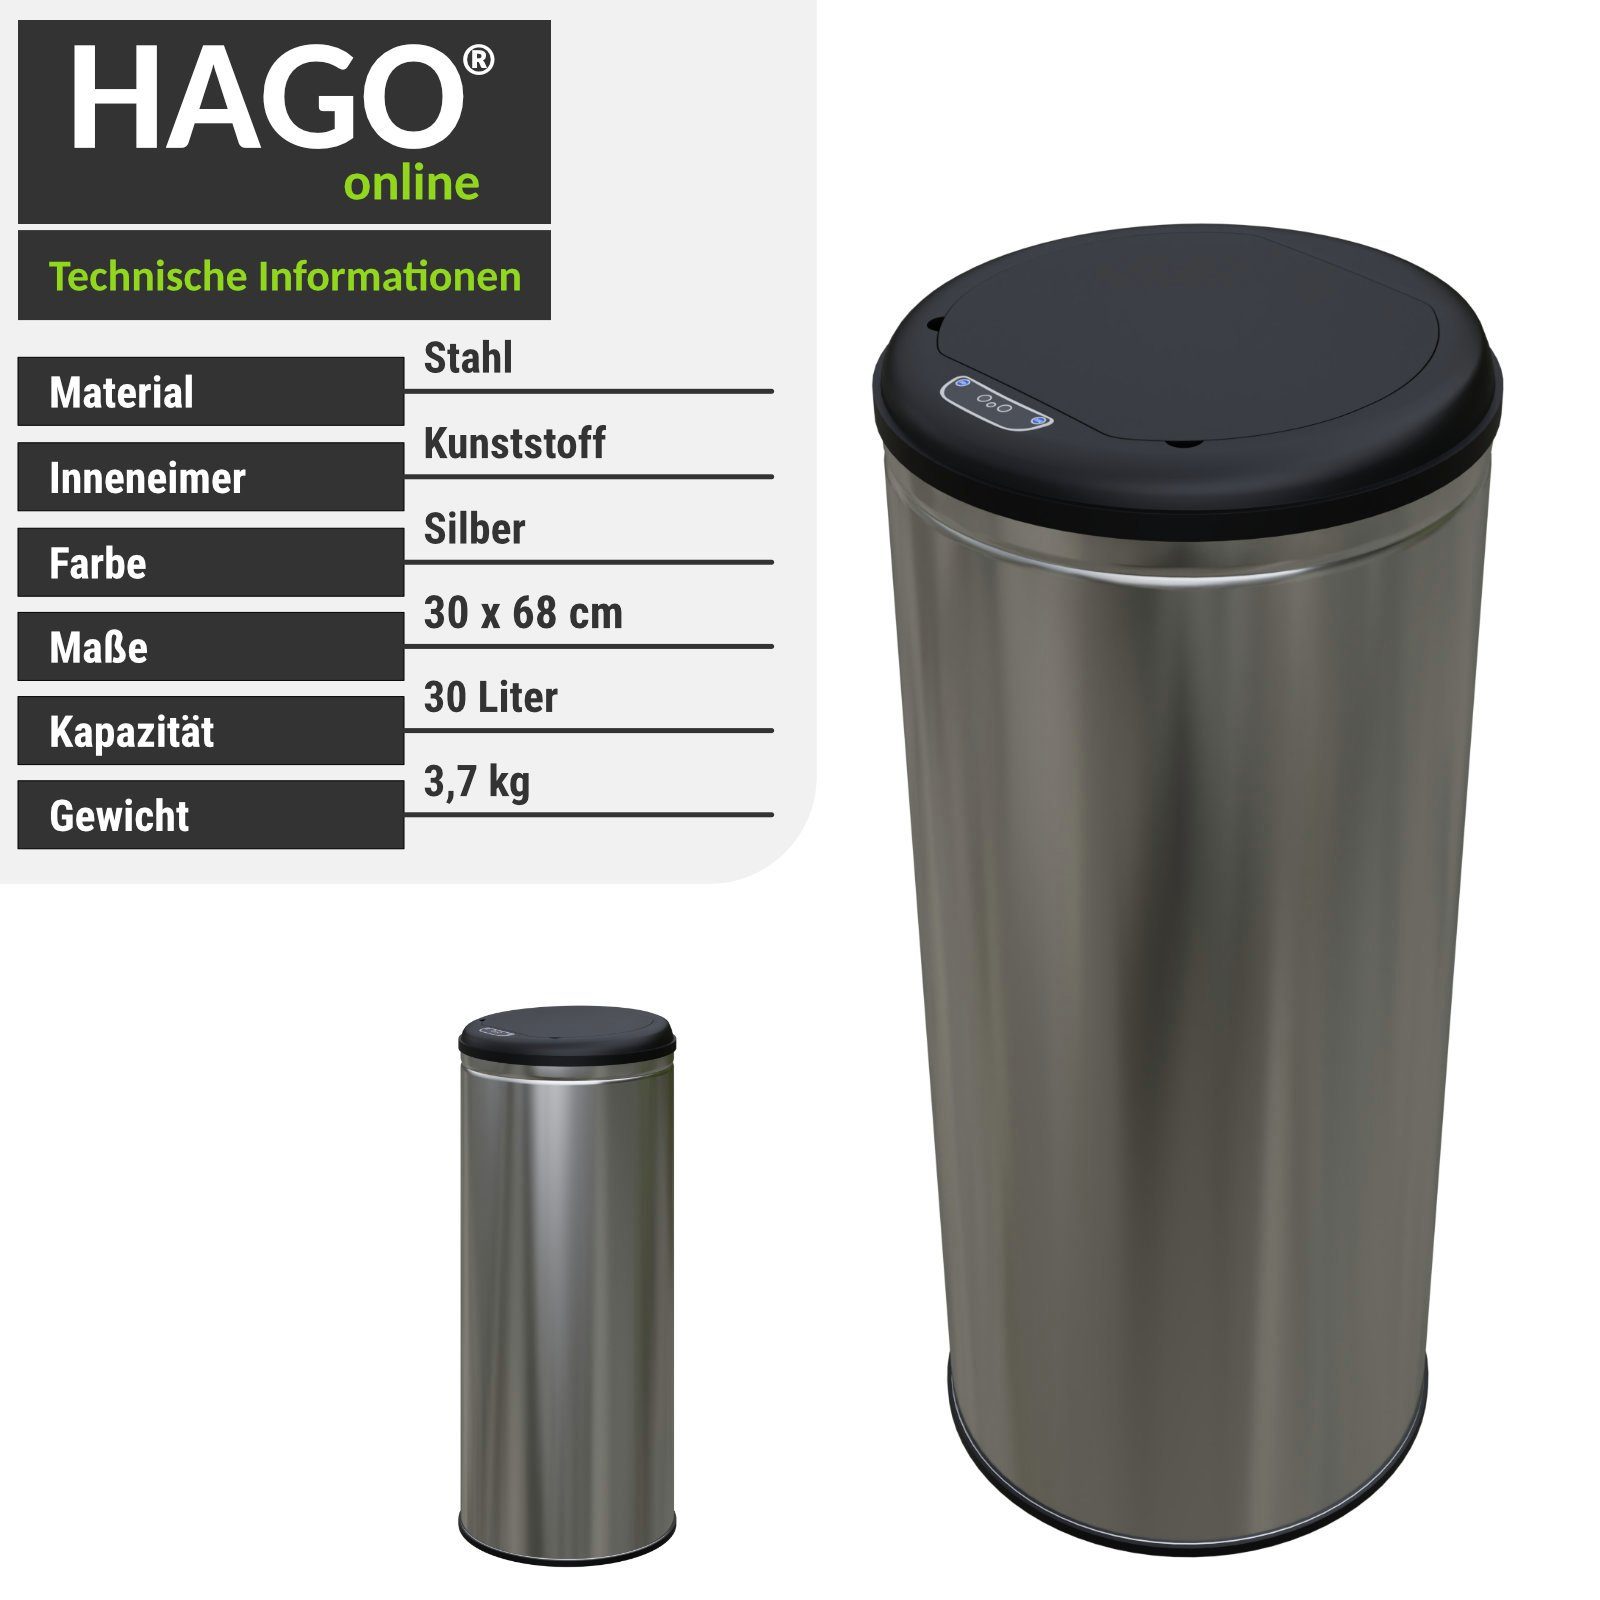 HAGO Mülltrennsystem Premium Edelstahl silber Sensor Papierkorb Mülleimer Automatik Abfalleimer